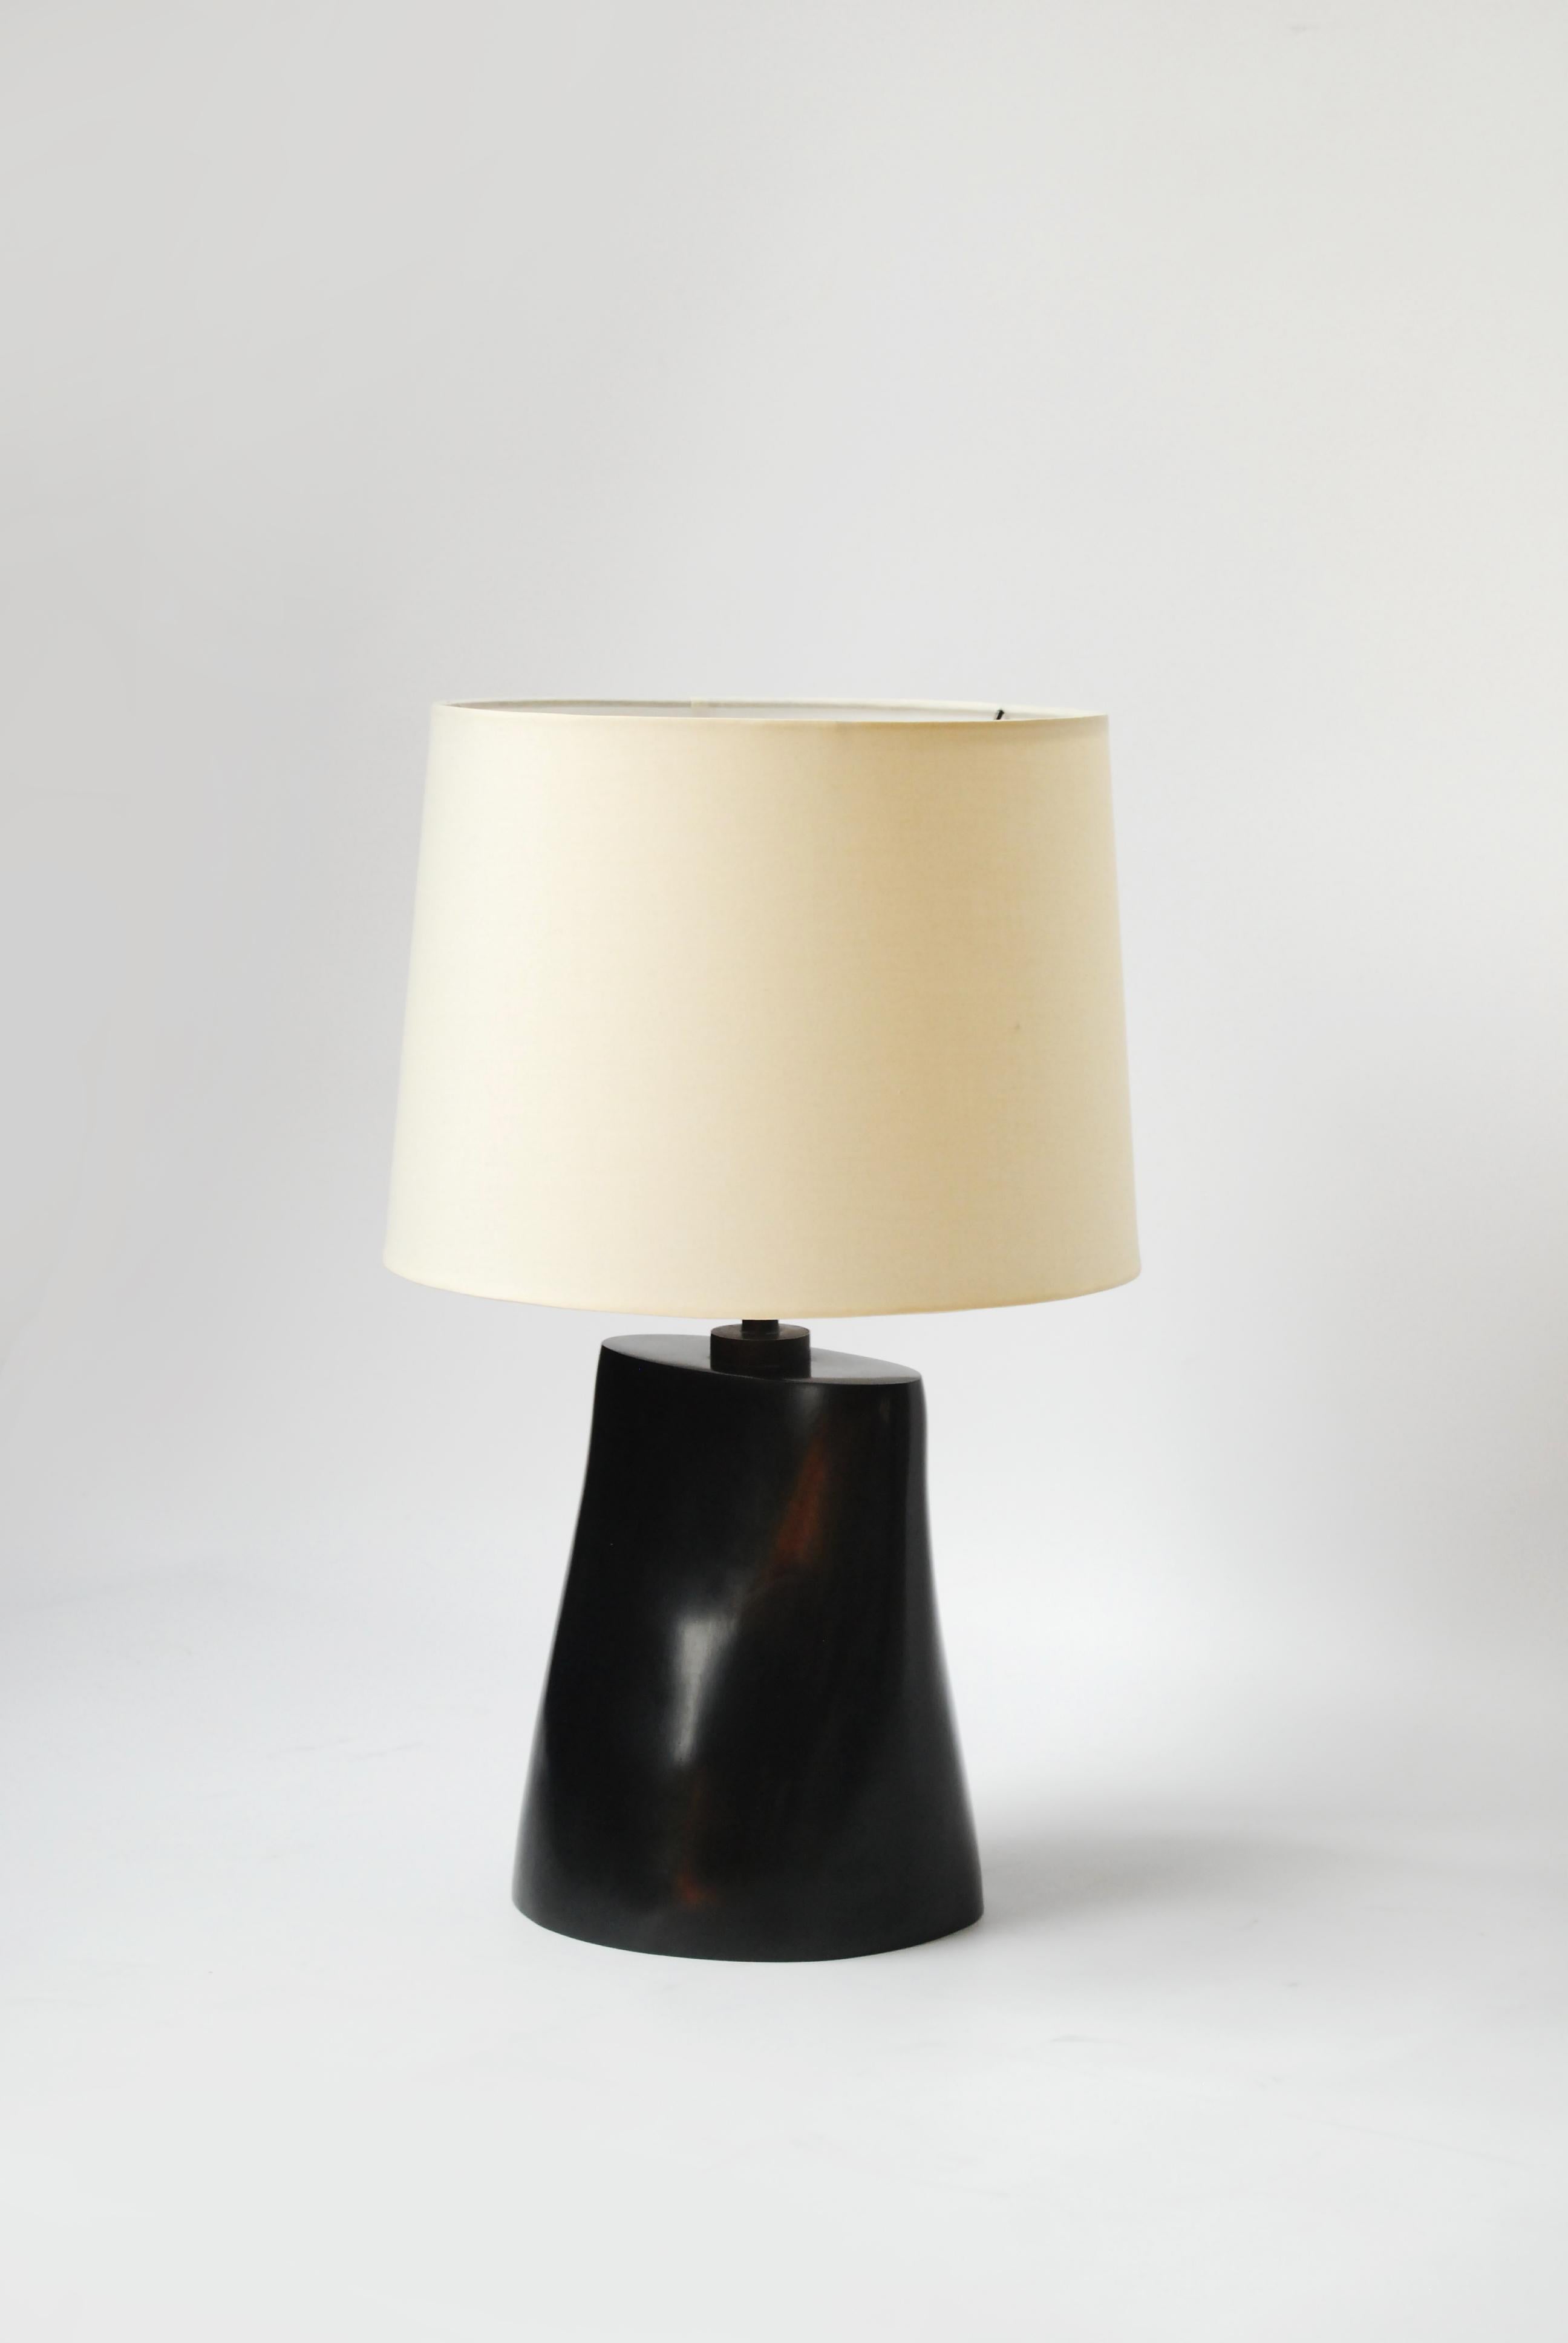 European Bronze Soho Table Lamp by Elan Atelier (In Stock) For Sale